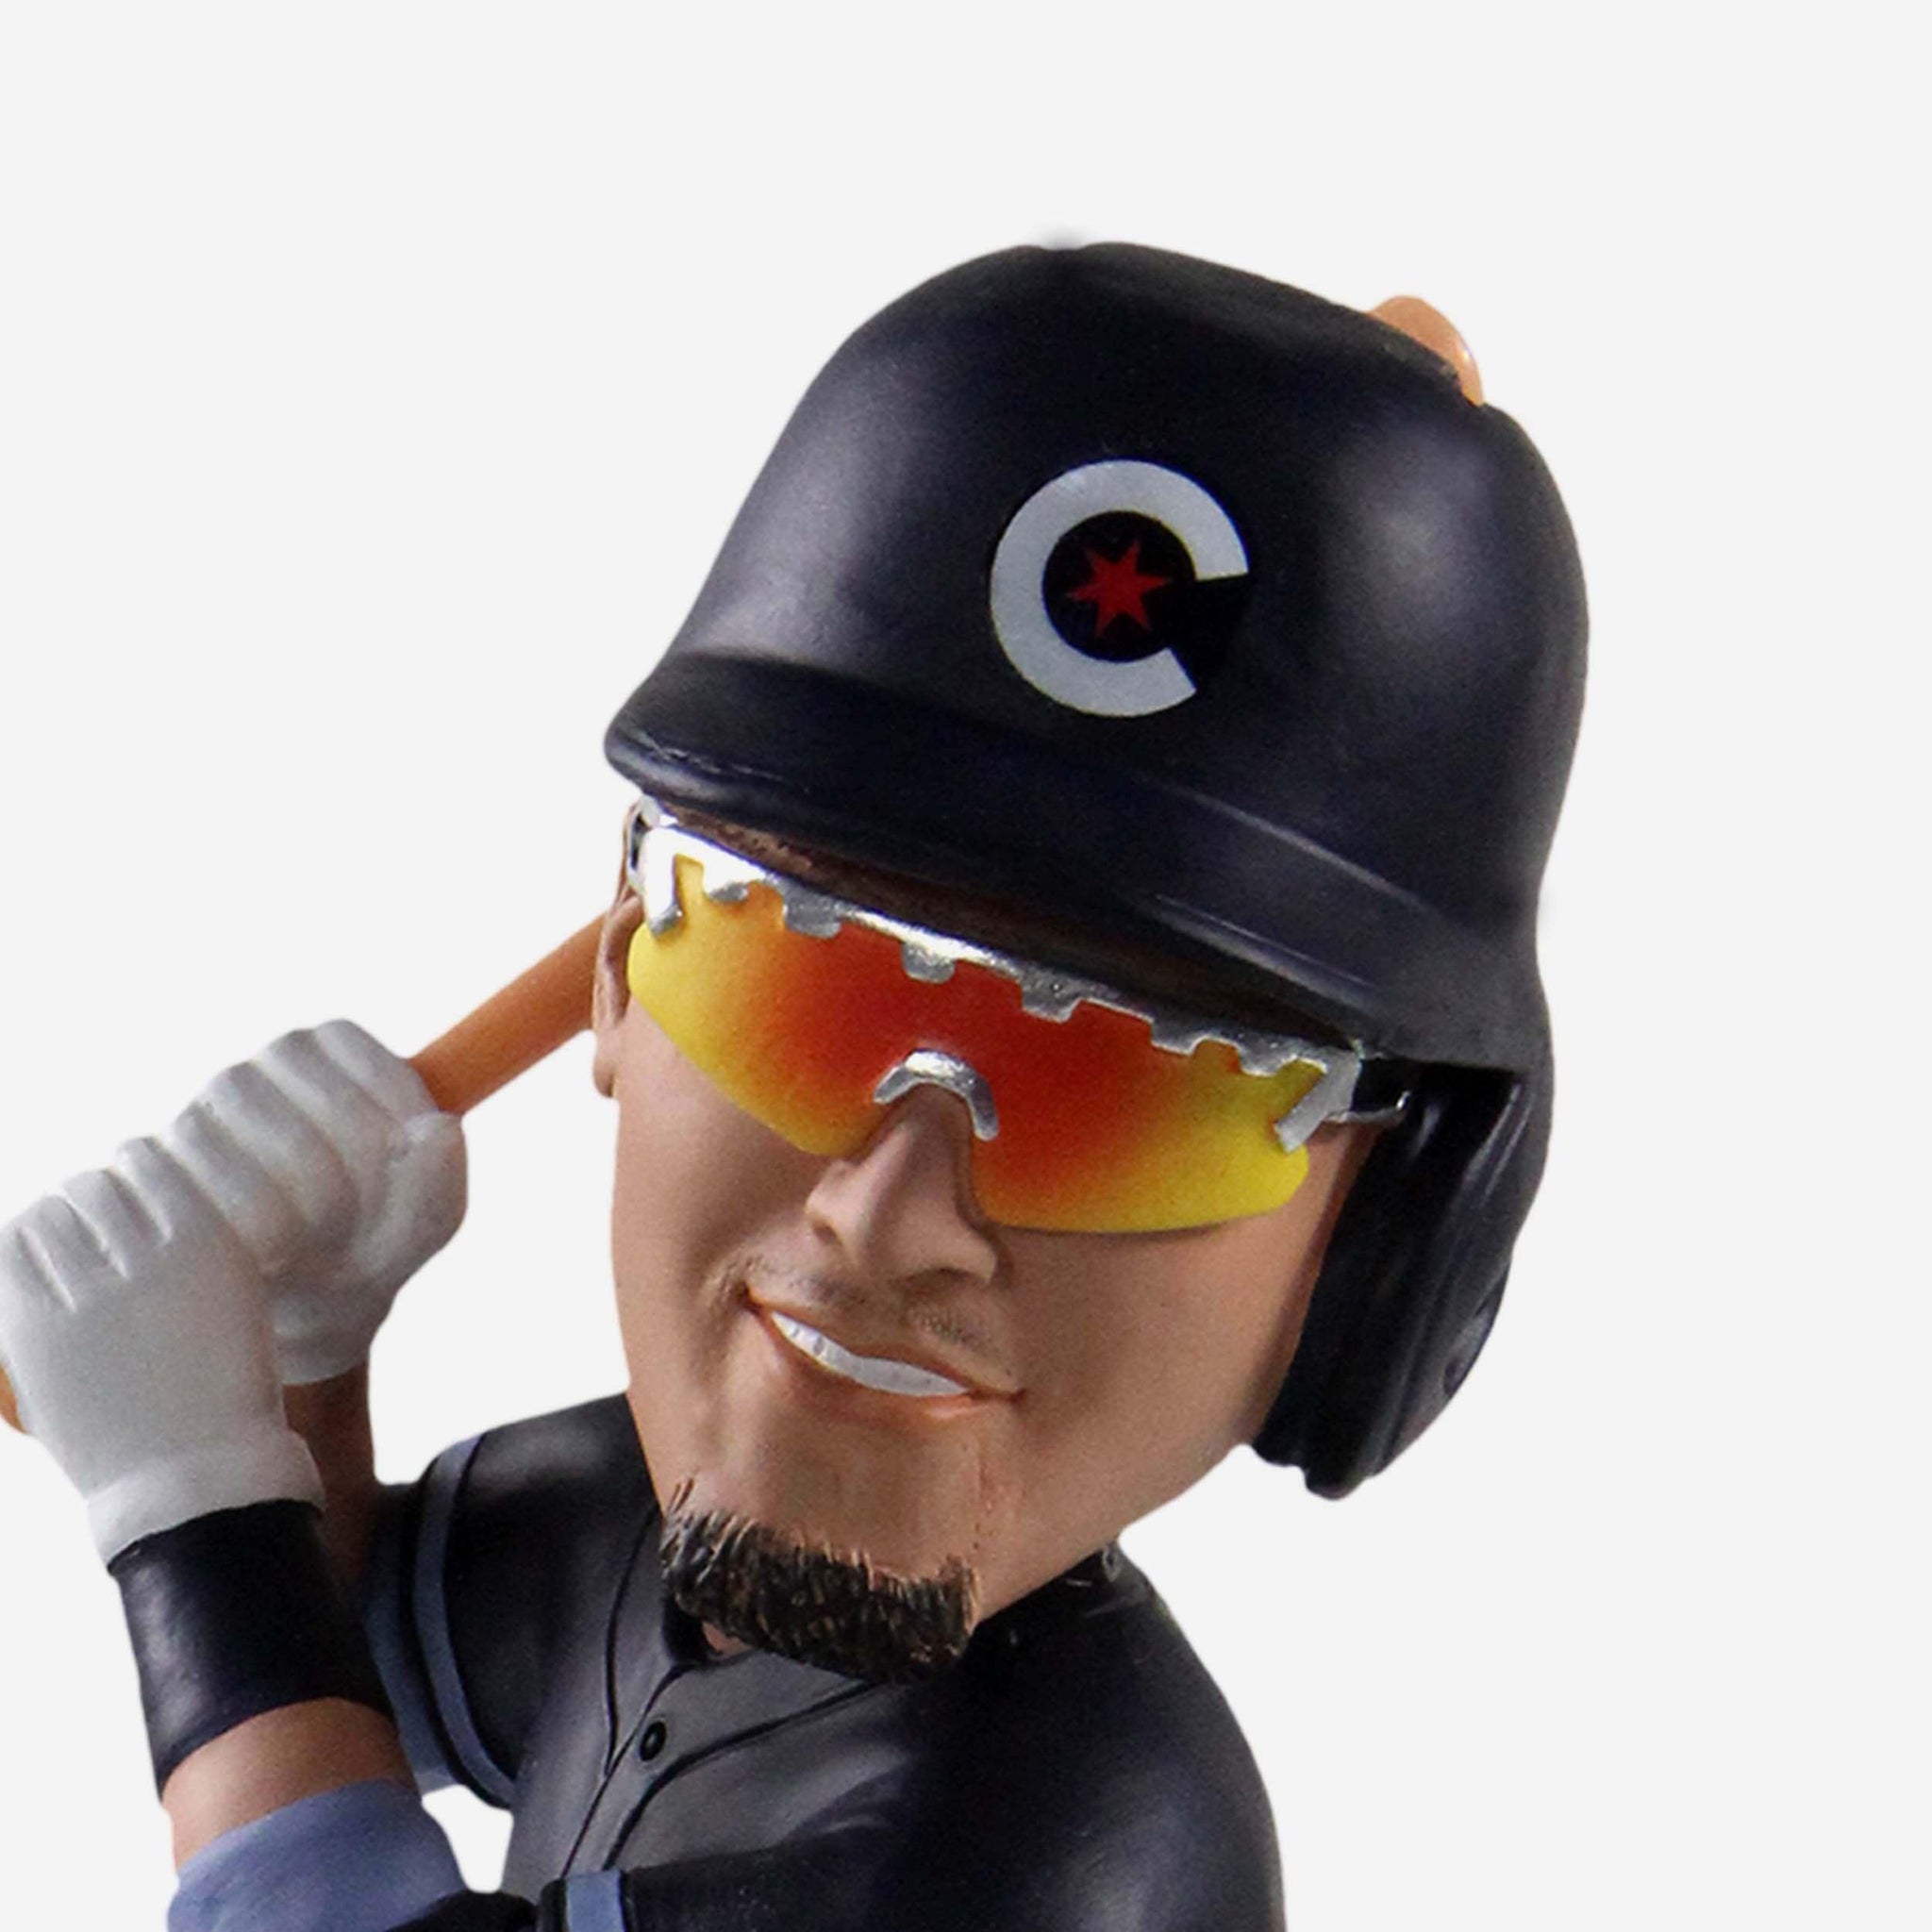 MLB Cubs Javier Baez (Home Uniform) Funko Pop! Vinyl Figure